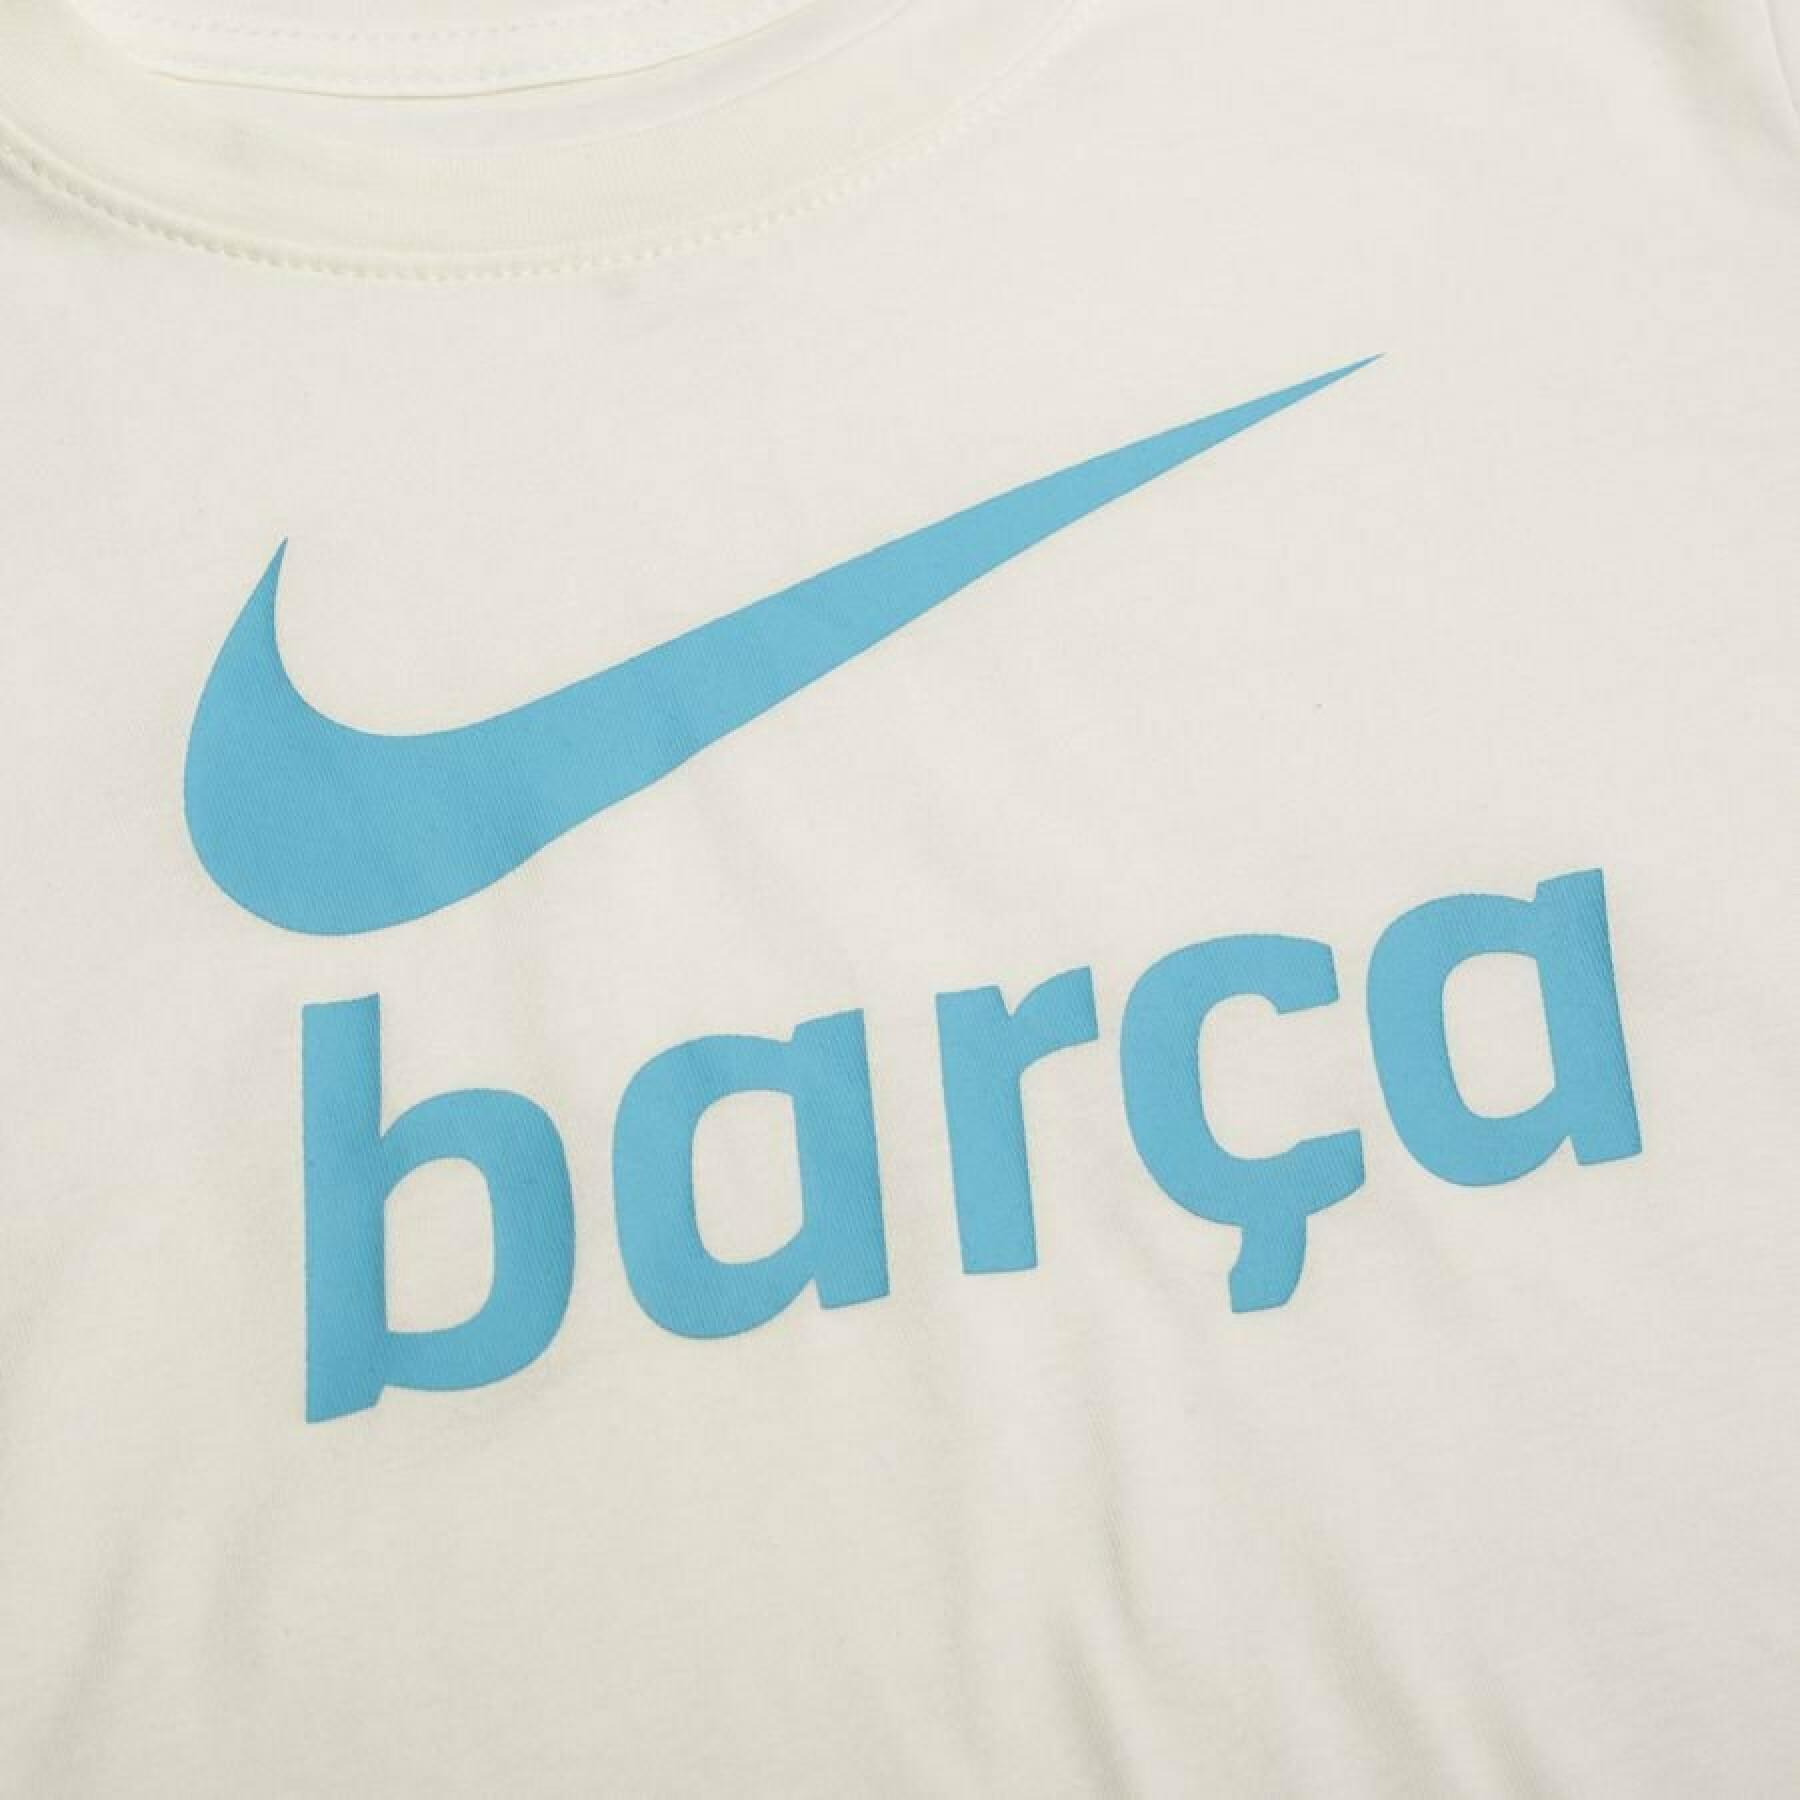 Koszulka damska FC Barcelone SWOOSH CLUB 2021/22